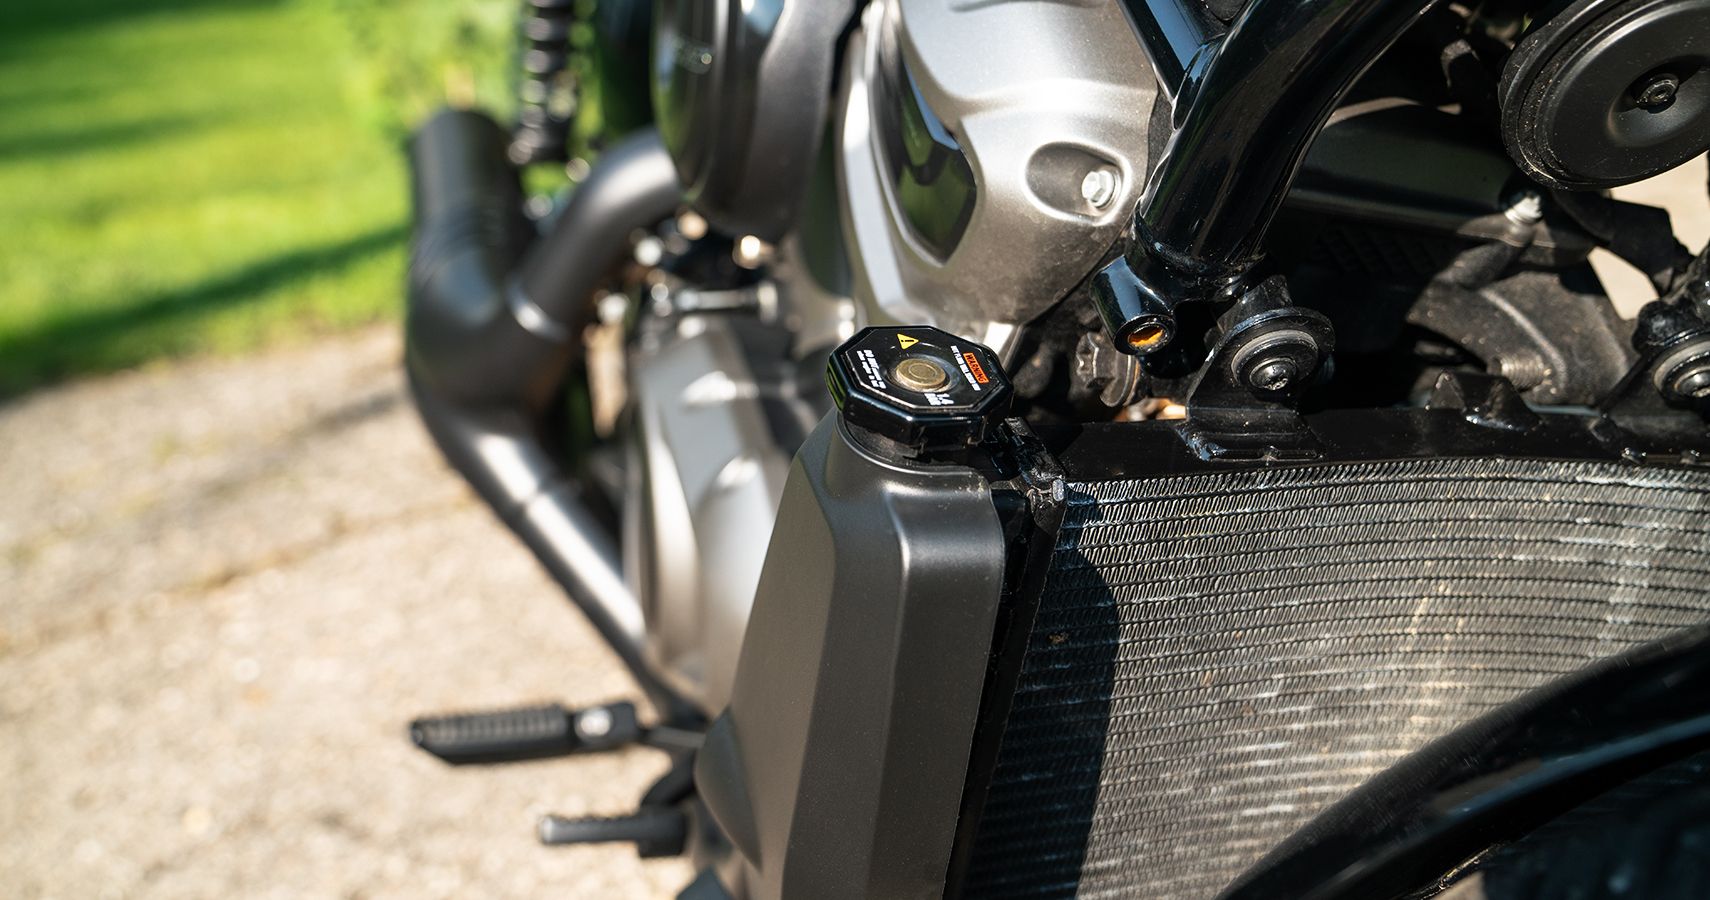 2022 Harley-Davidson Nightster radiator